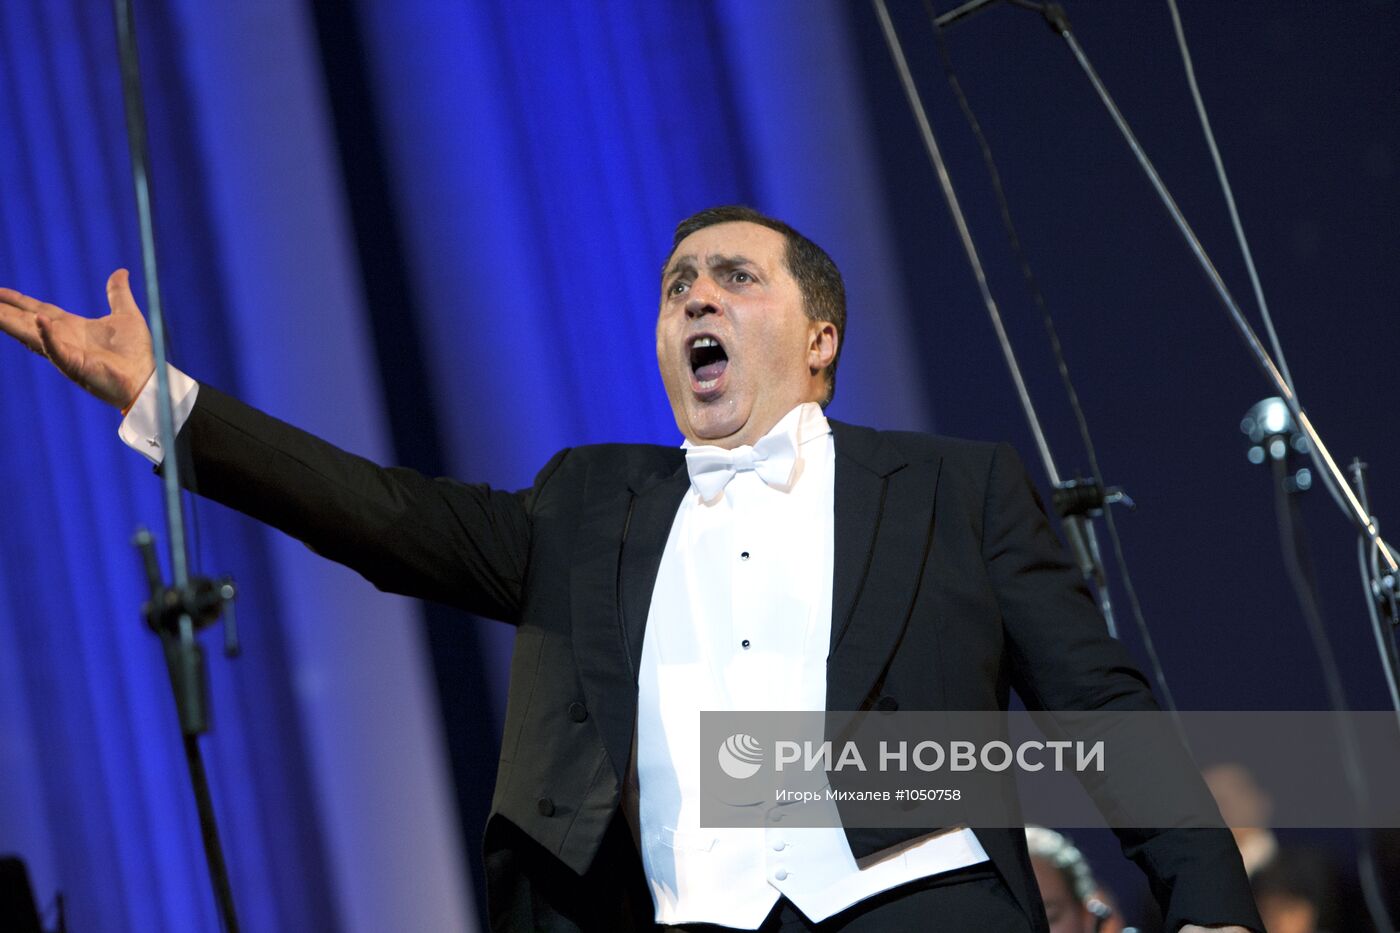 Оперный певец П.Ш. Бурчуладзе